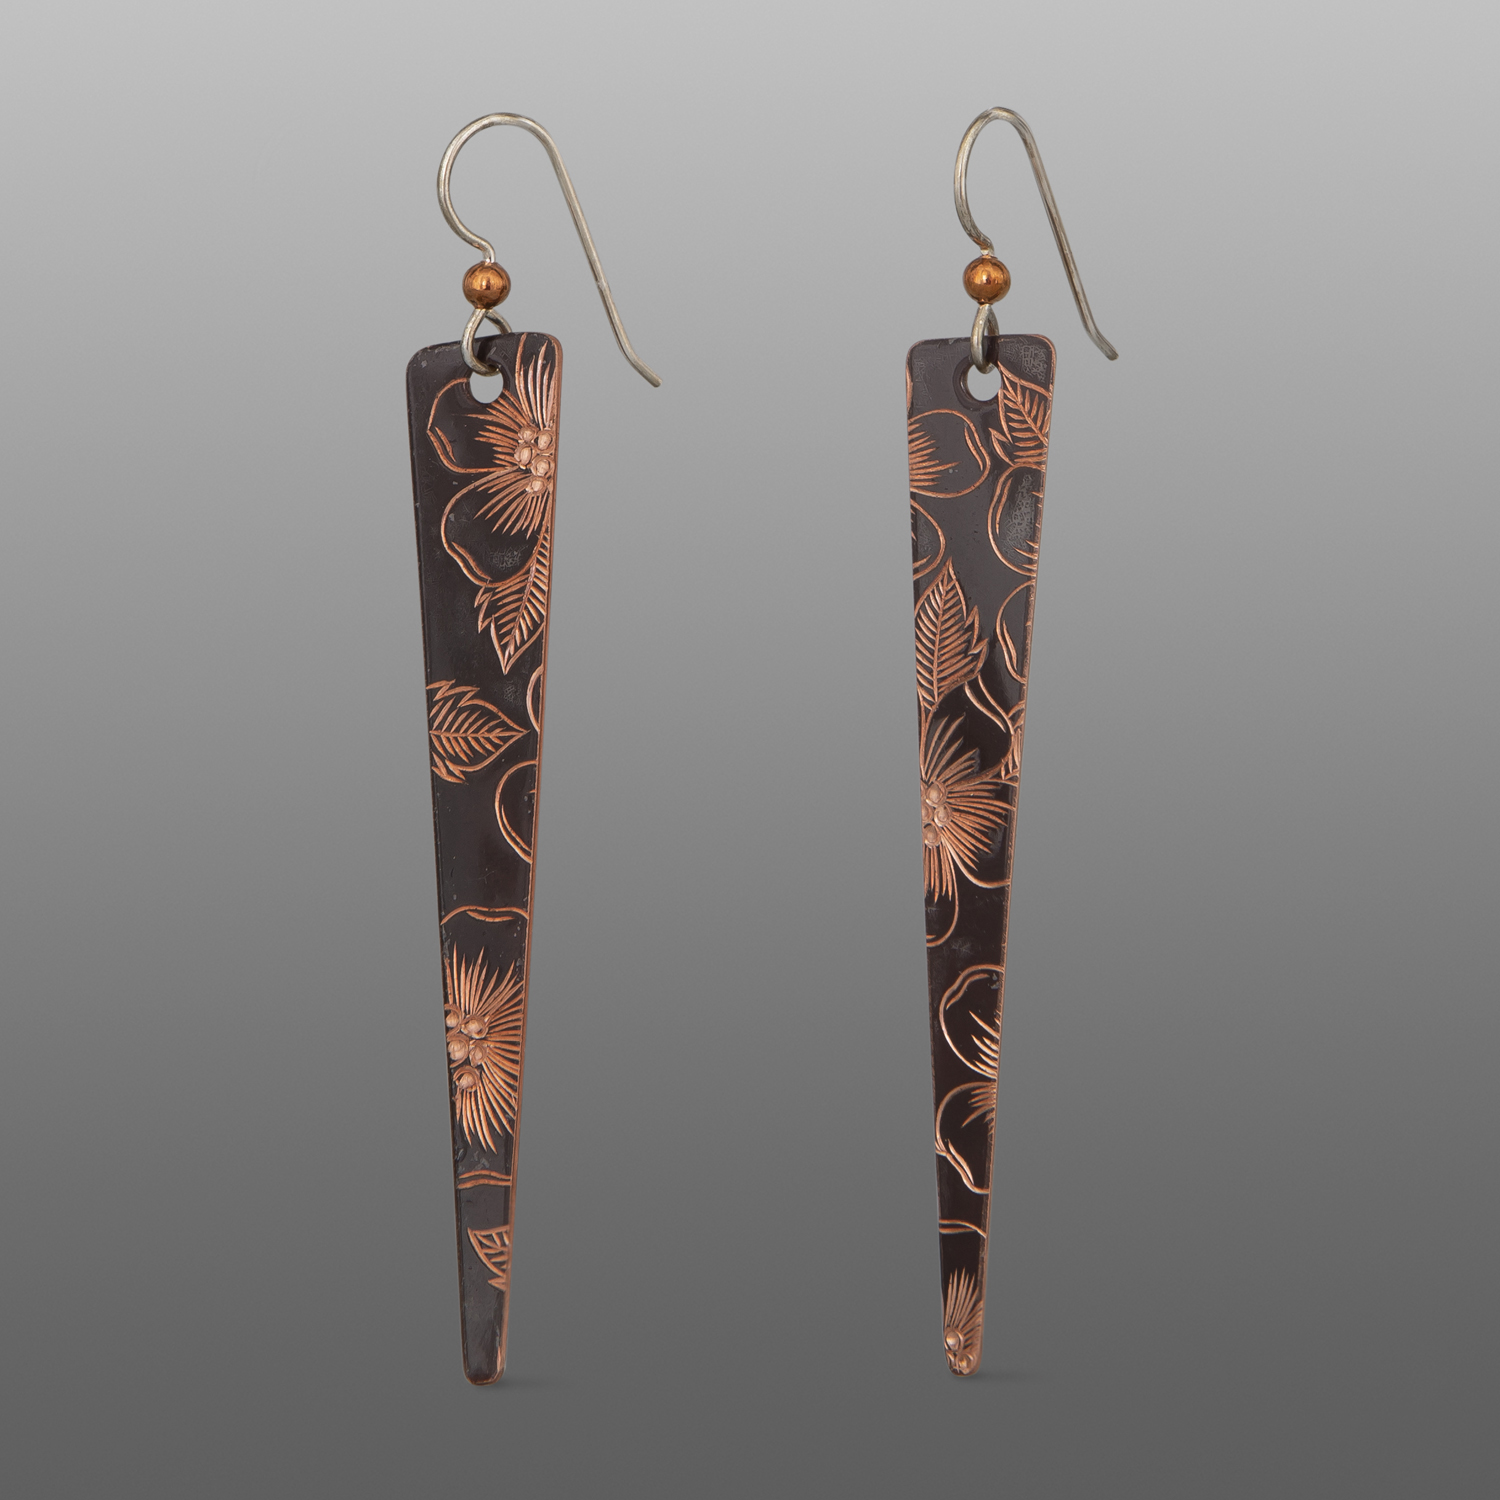 Copper Wildrose Dagger Earrings
Jennifer Younger
Tlingit
Copper
2½" x ¼"
$280
